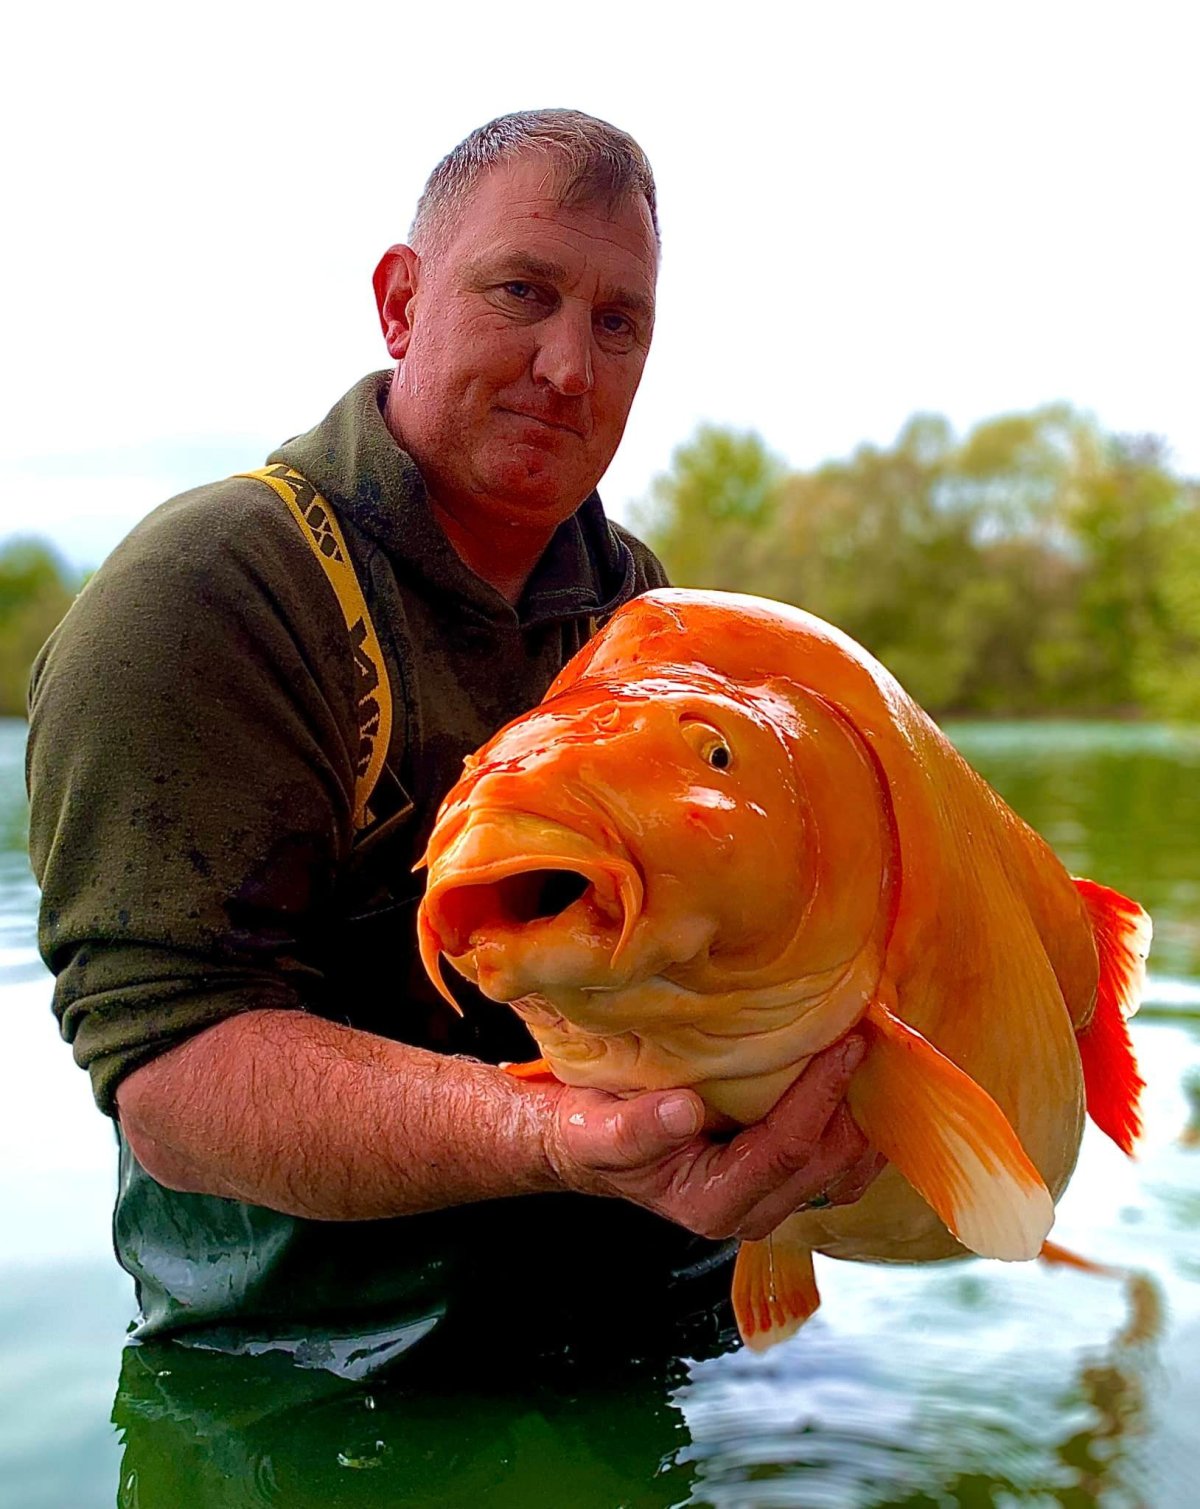 Angler reels in massive 67-pound goldfish named 'The Carrot' - National